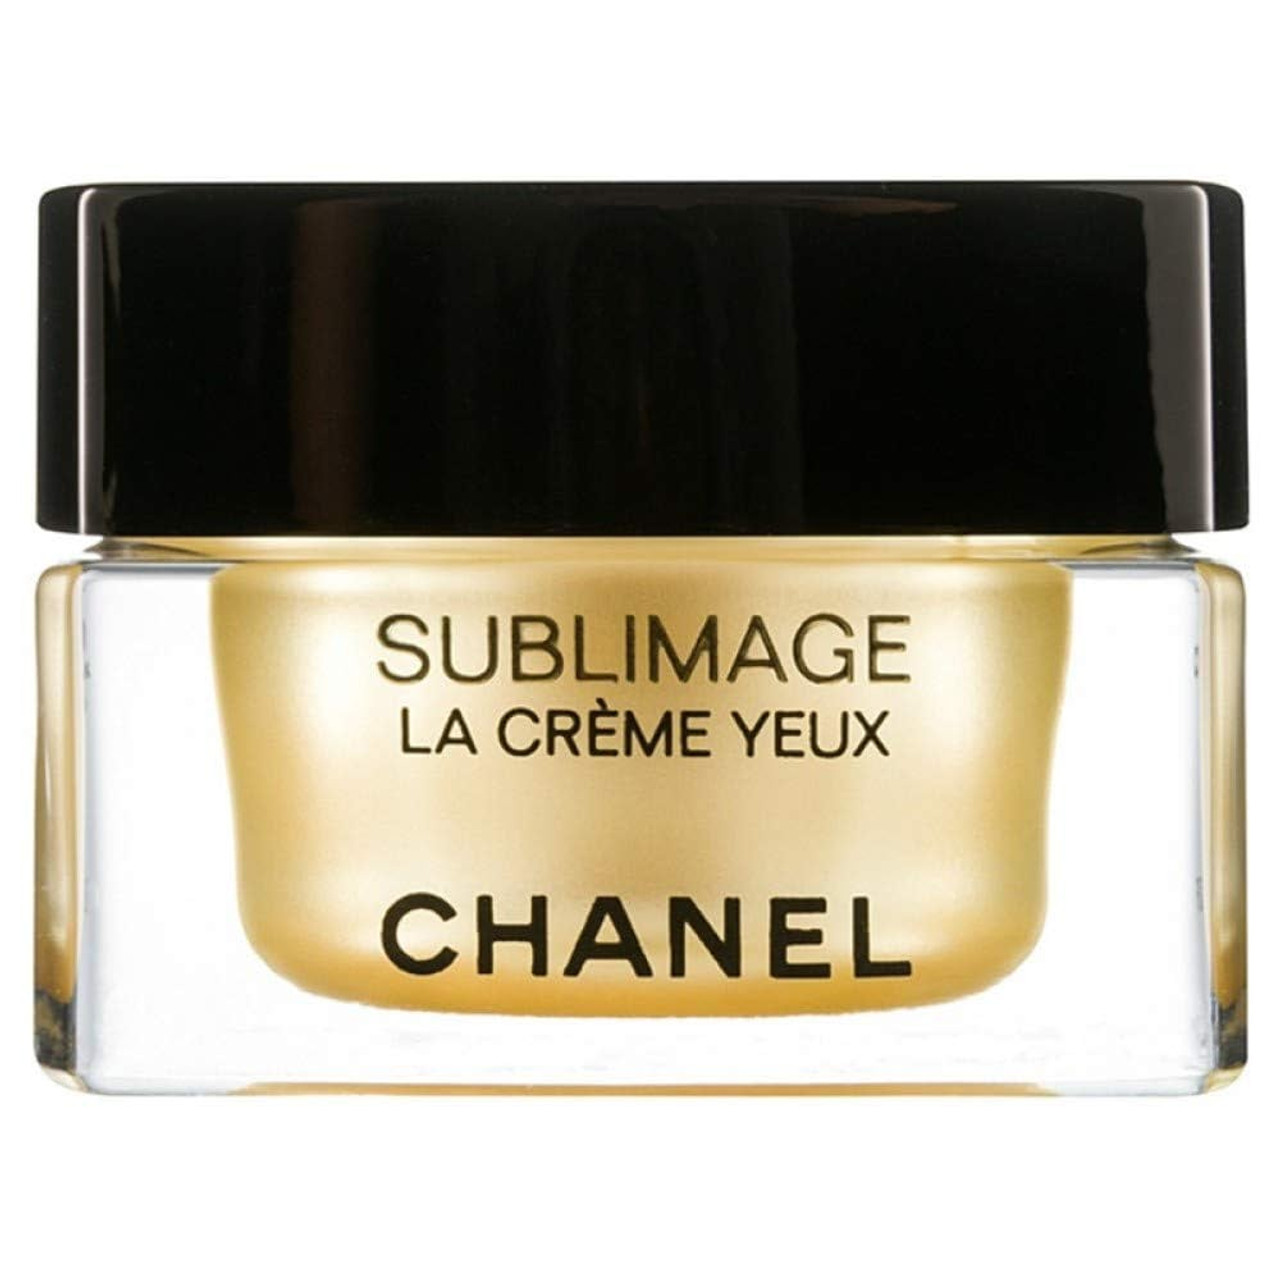 Chanel Sublimage Le Correcteur Yeux Radiance-Generating Concealing